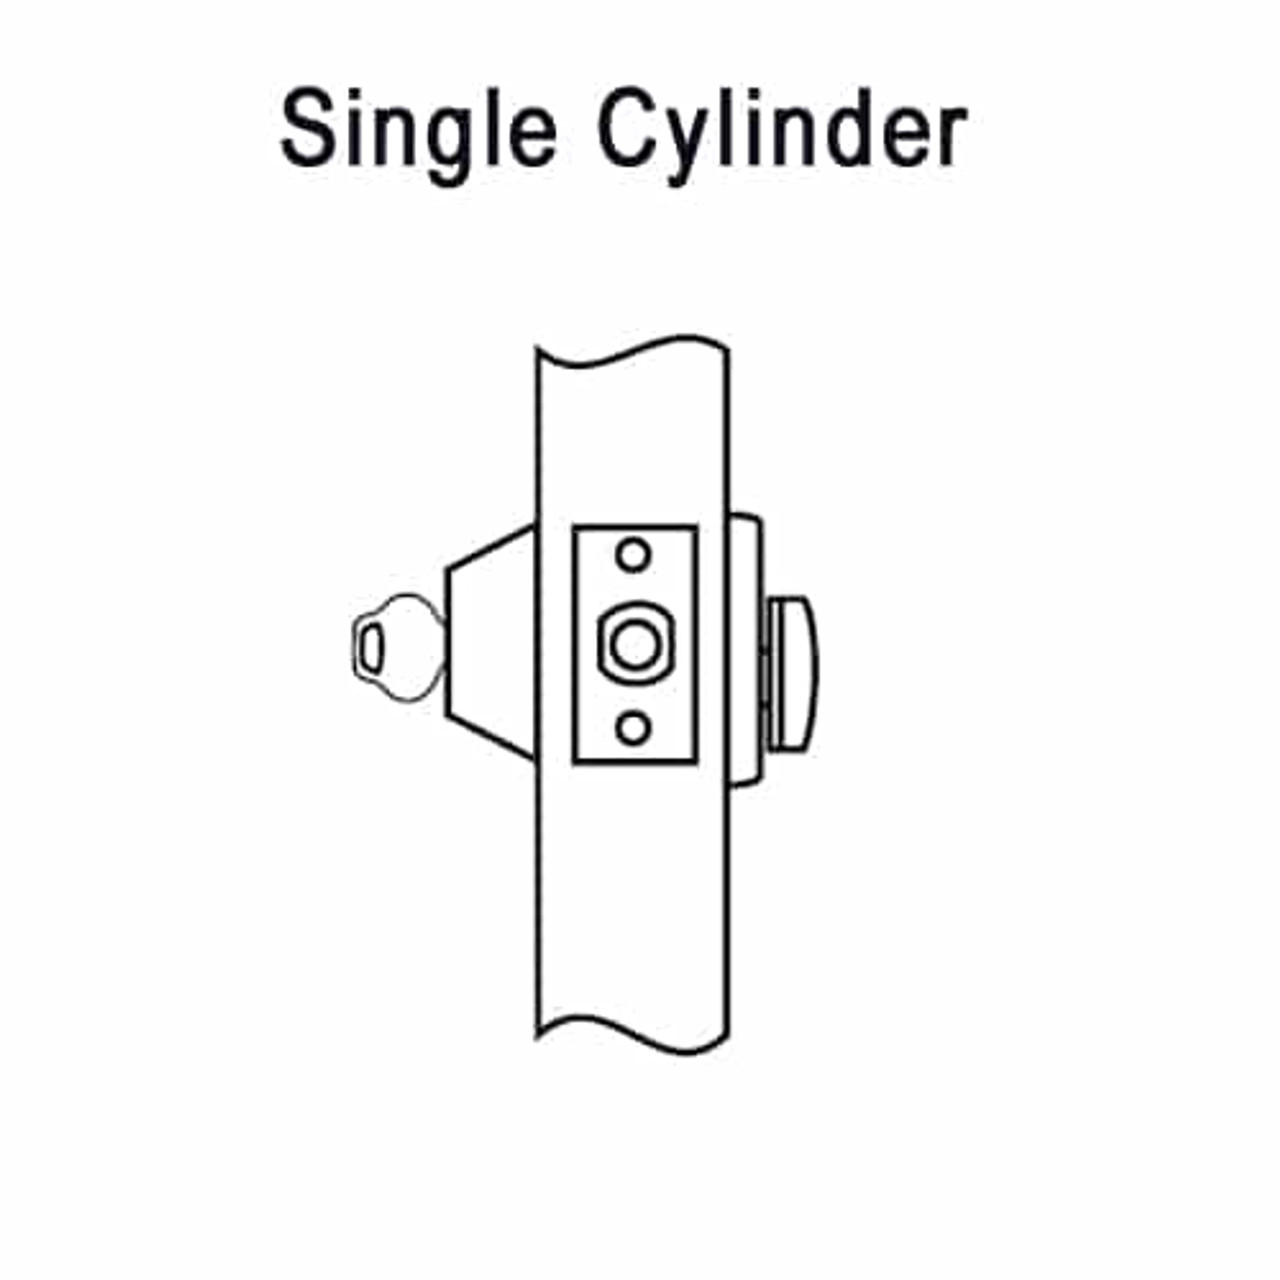 DL3013-618 Corbin DL3000 Series Cylindrical Deadlocks with Single Cylinder in Bright Nickel